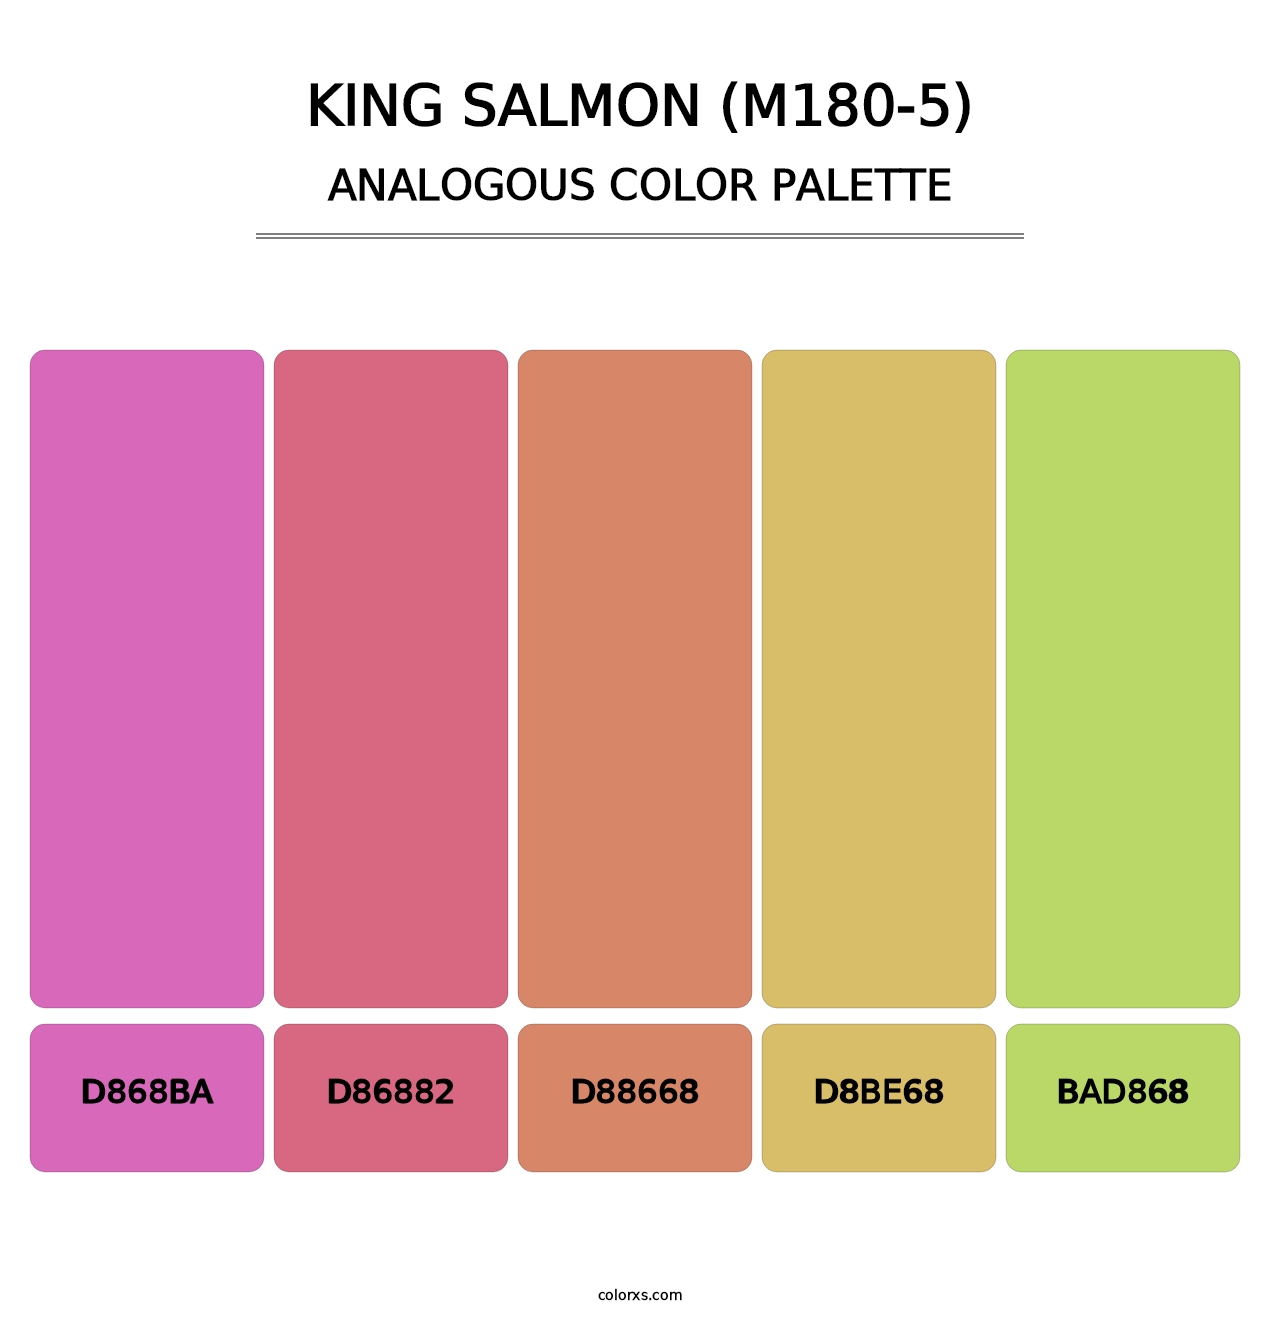 King Salmon (M180-5) - Analogous Color Palette